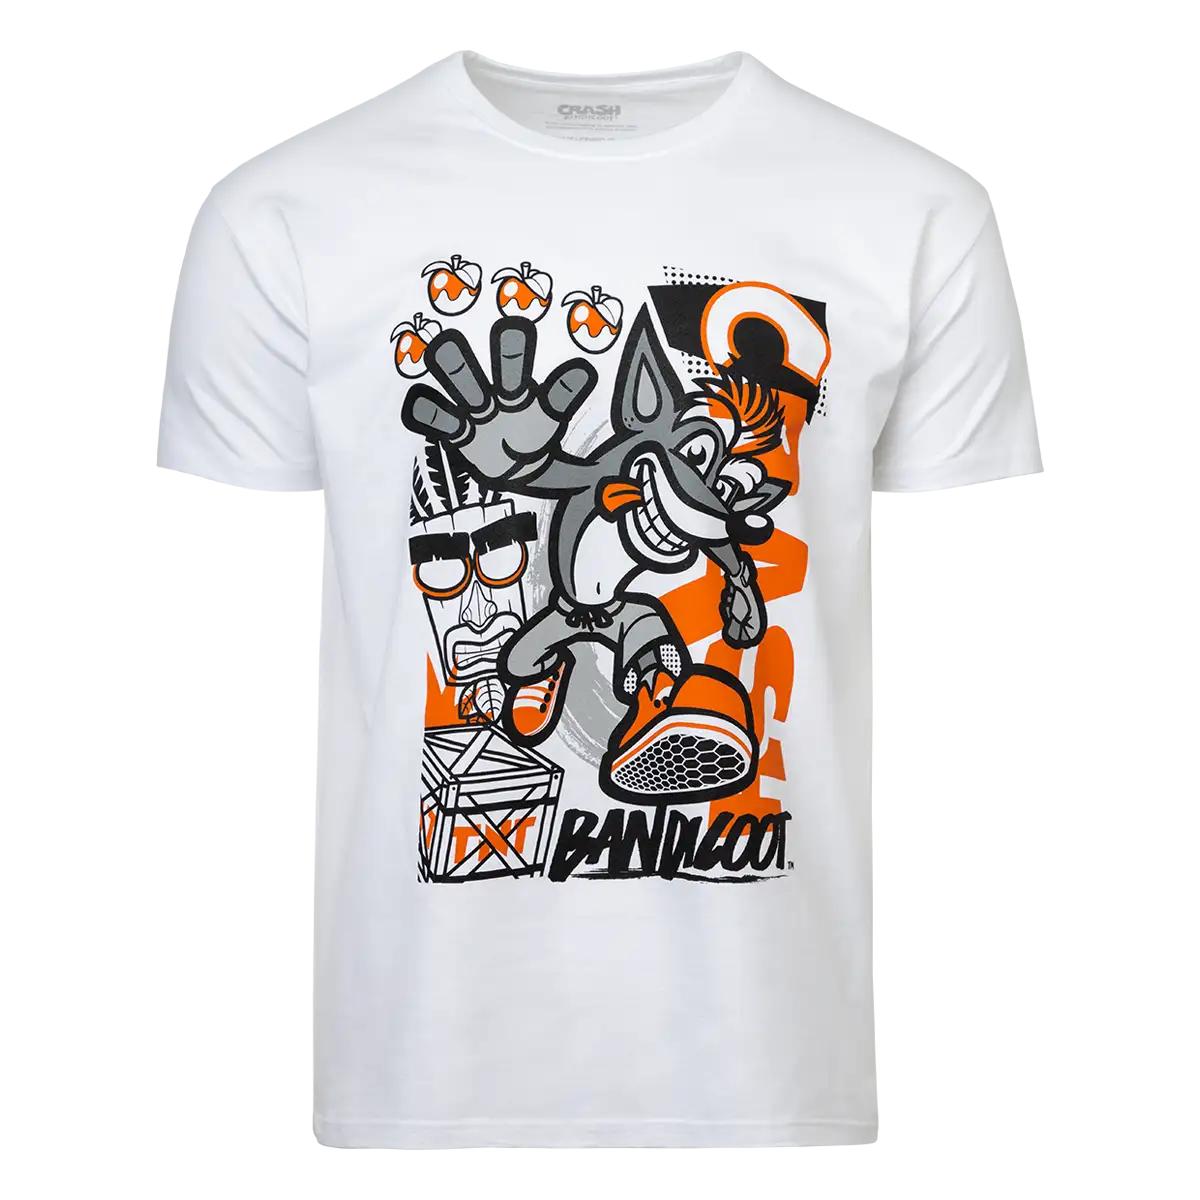 Crash Bandicoot T-Shirt "Forward"